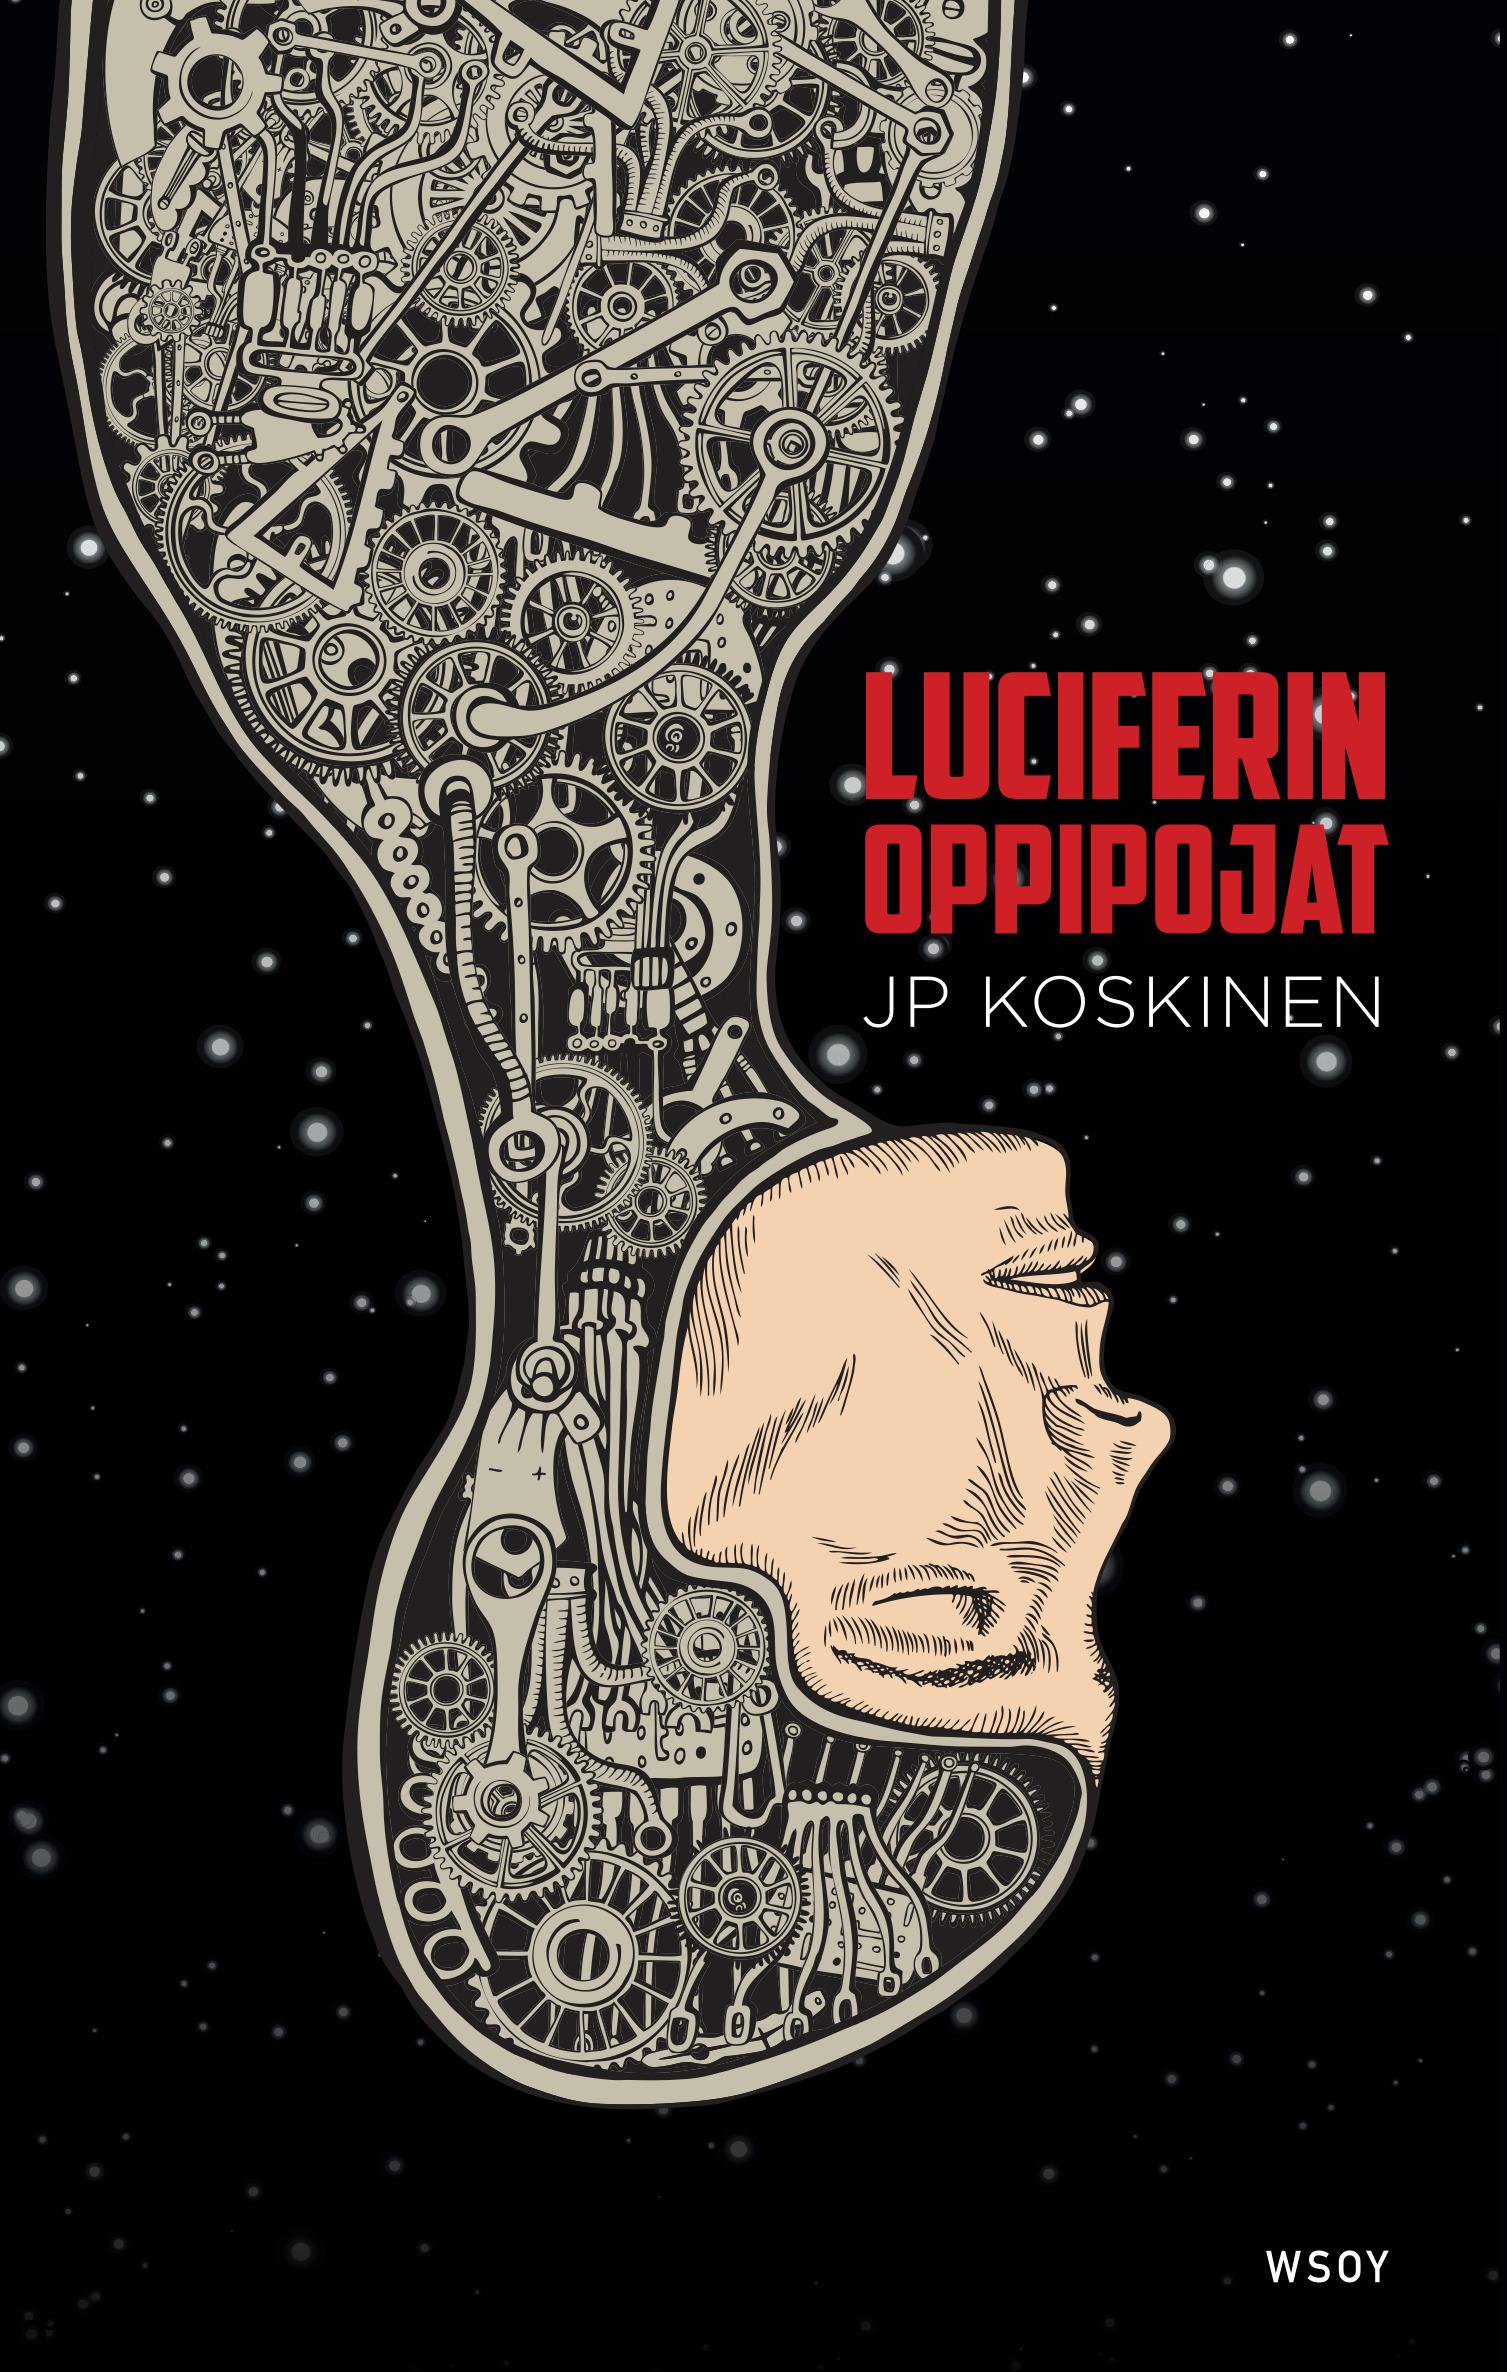 Luciferin oppipojat (Finnish language, 2016)